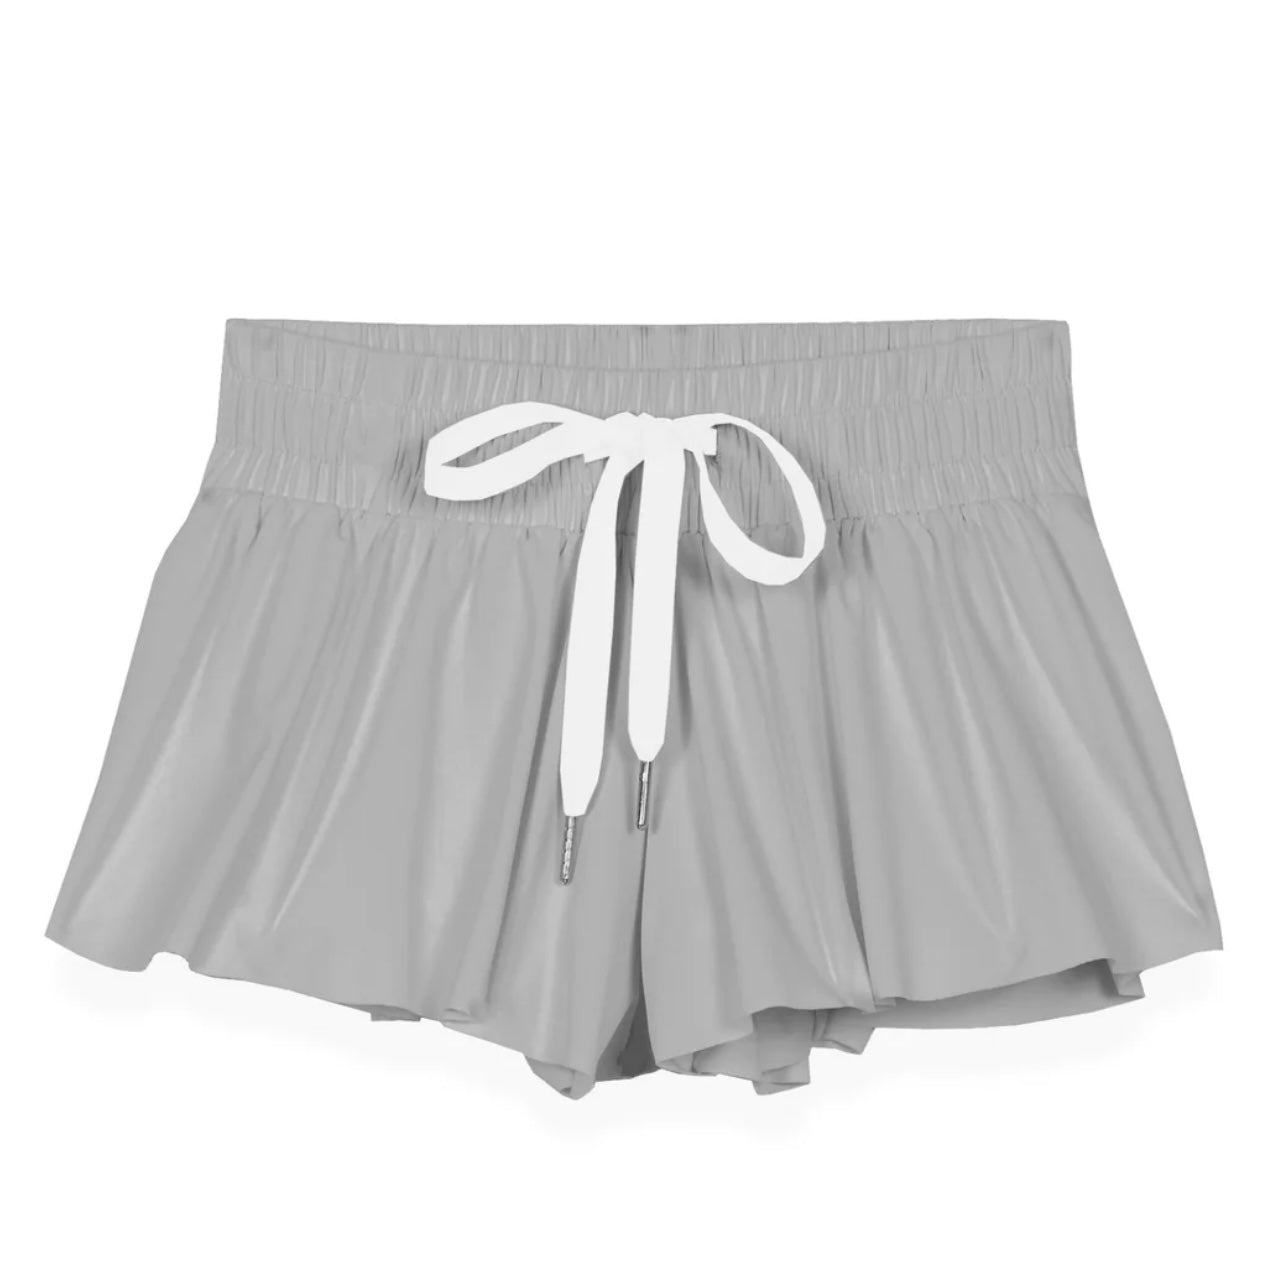 Katie J NYC  Girls Tween Farrah Shorts - Grey